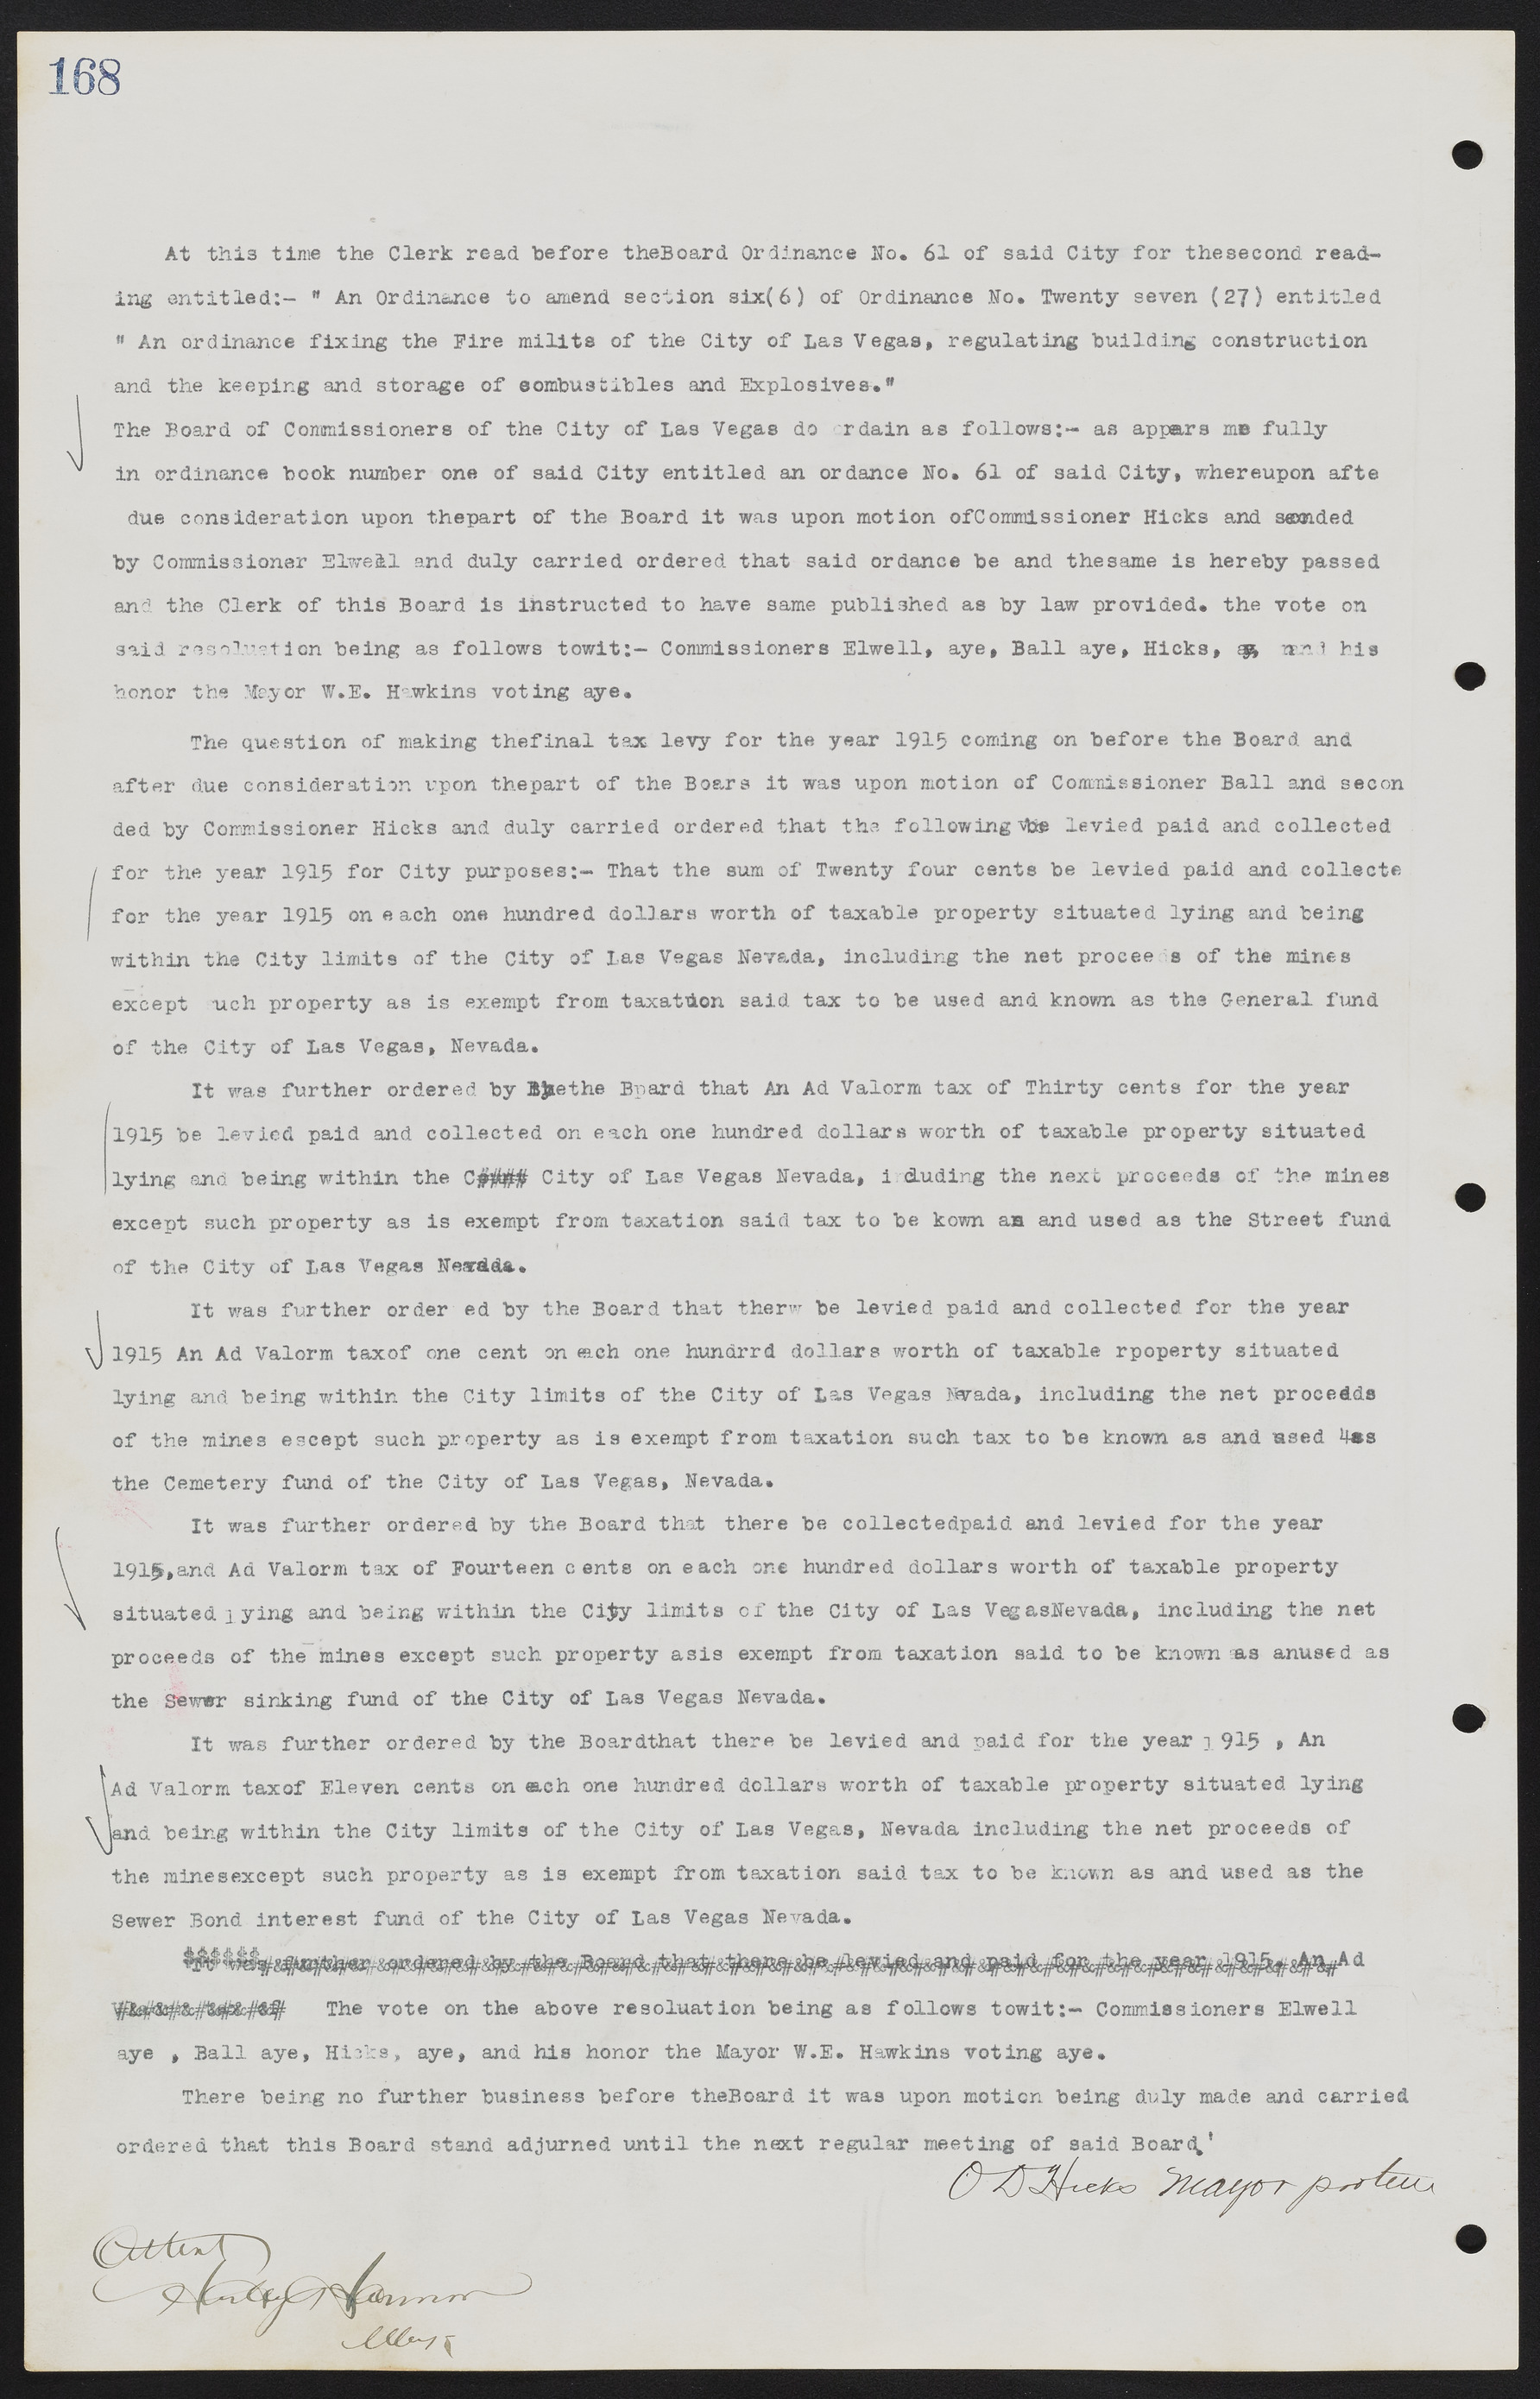 Las Vegas City Commission Minutes, June 22, 1911 to February 7, 1922, lvc000001-184